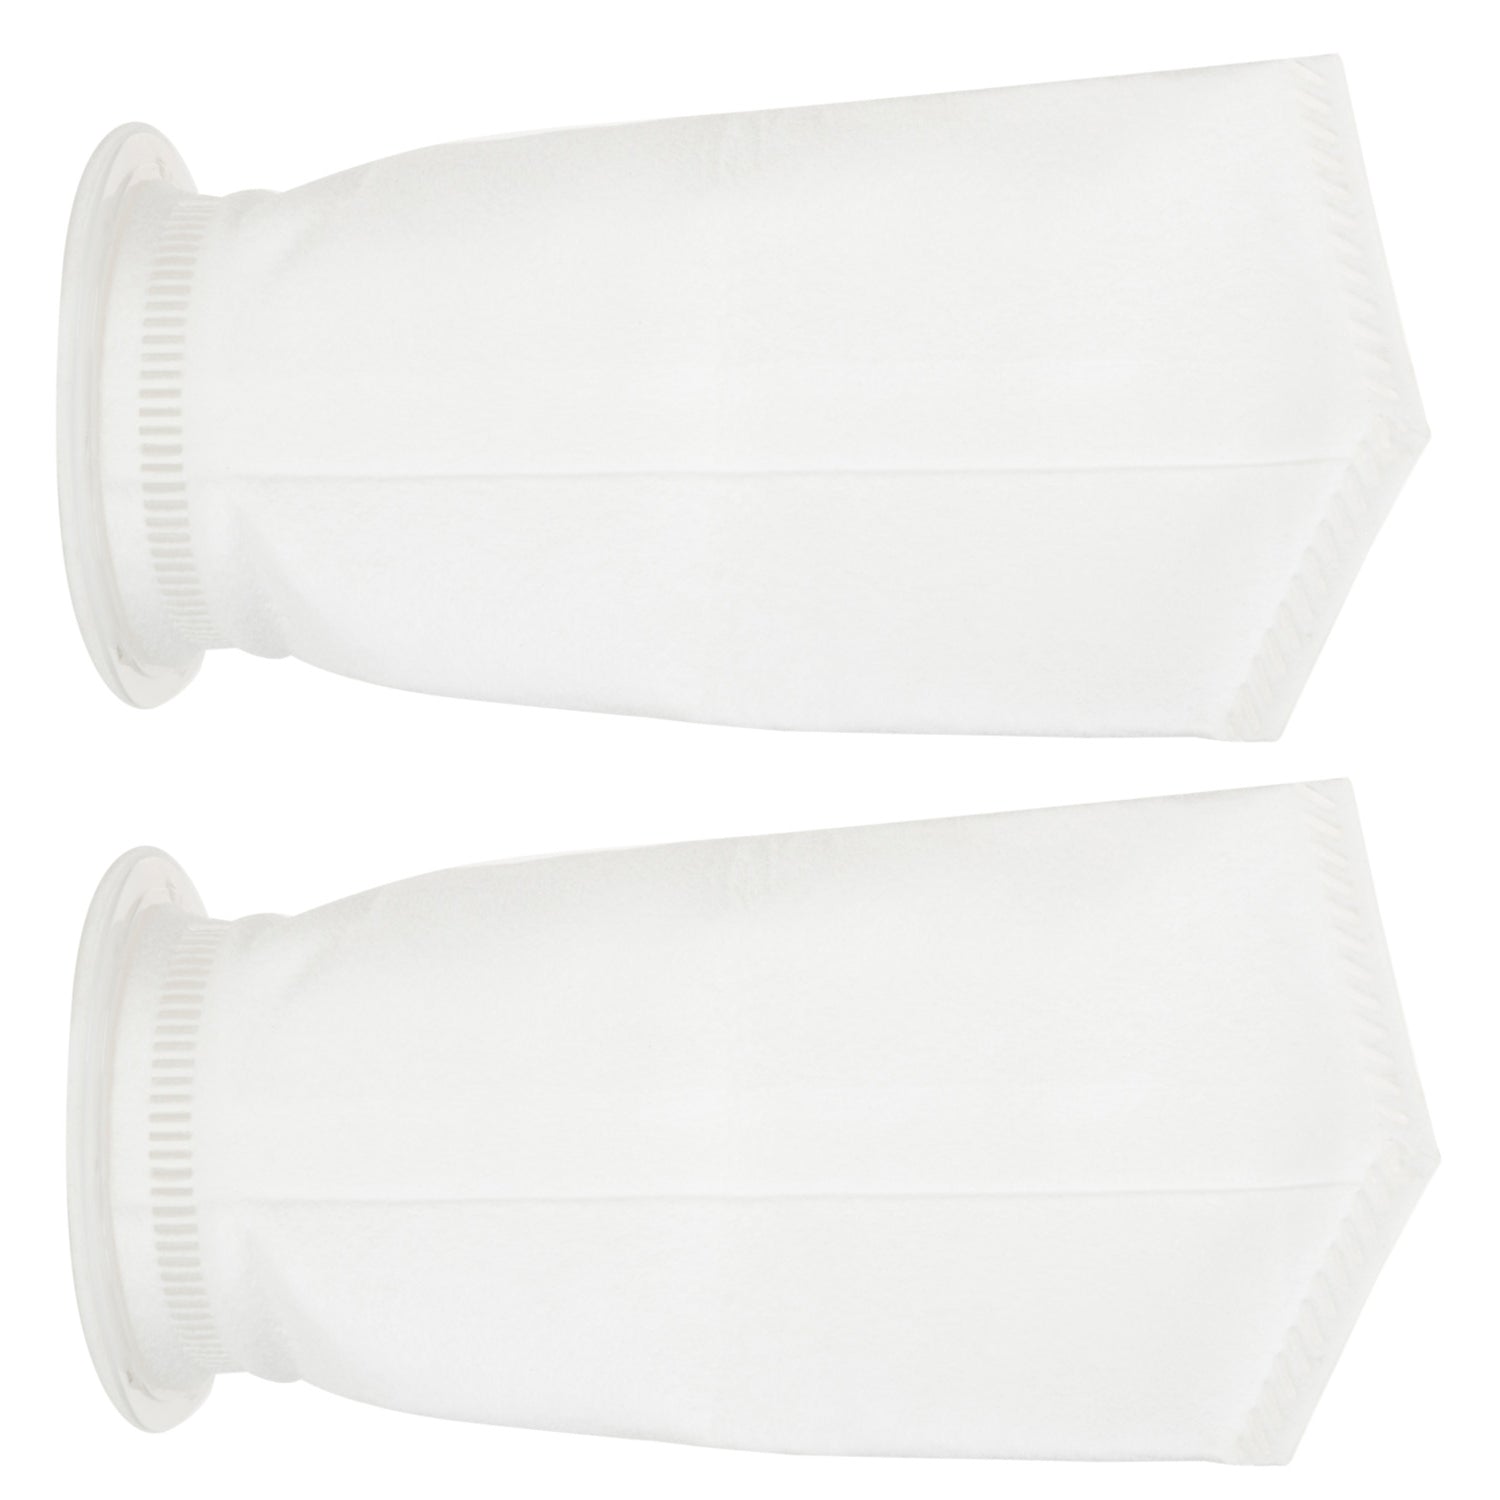 Nylon Mesh Filter Socks Bag 200 Micron 7 Inch Ring by 16 Inch Long NMO  Aquarium Filter Bags -1Pack (200 Micron 7